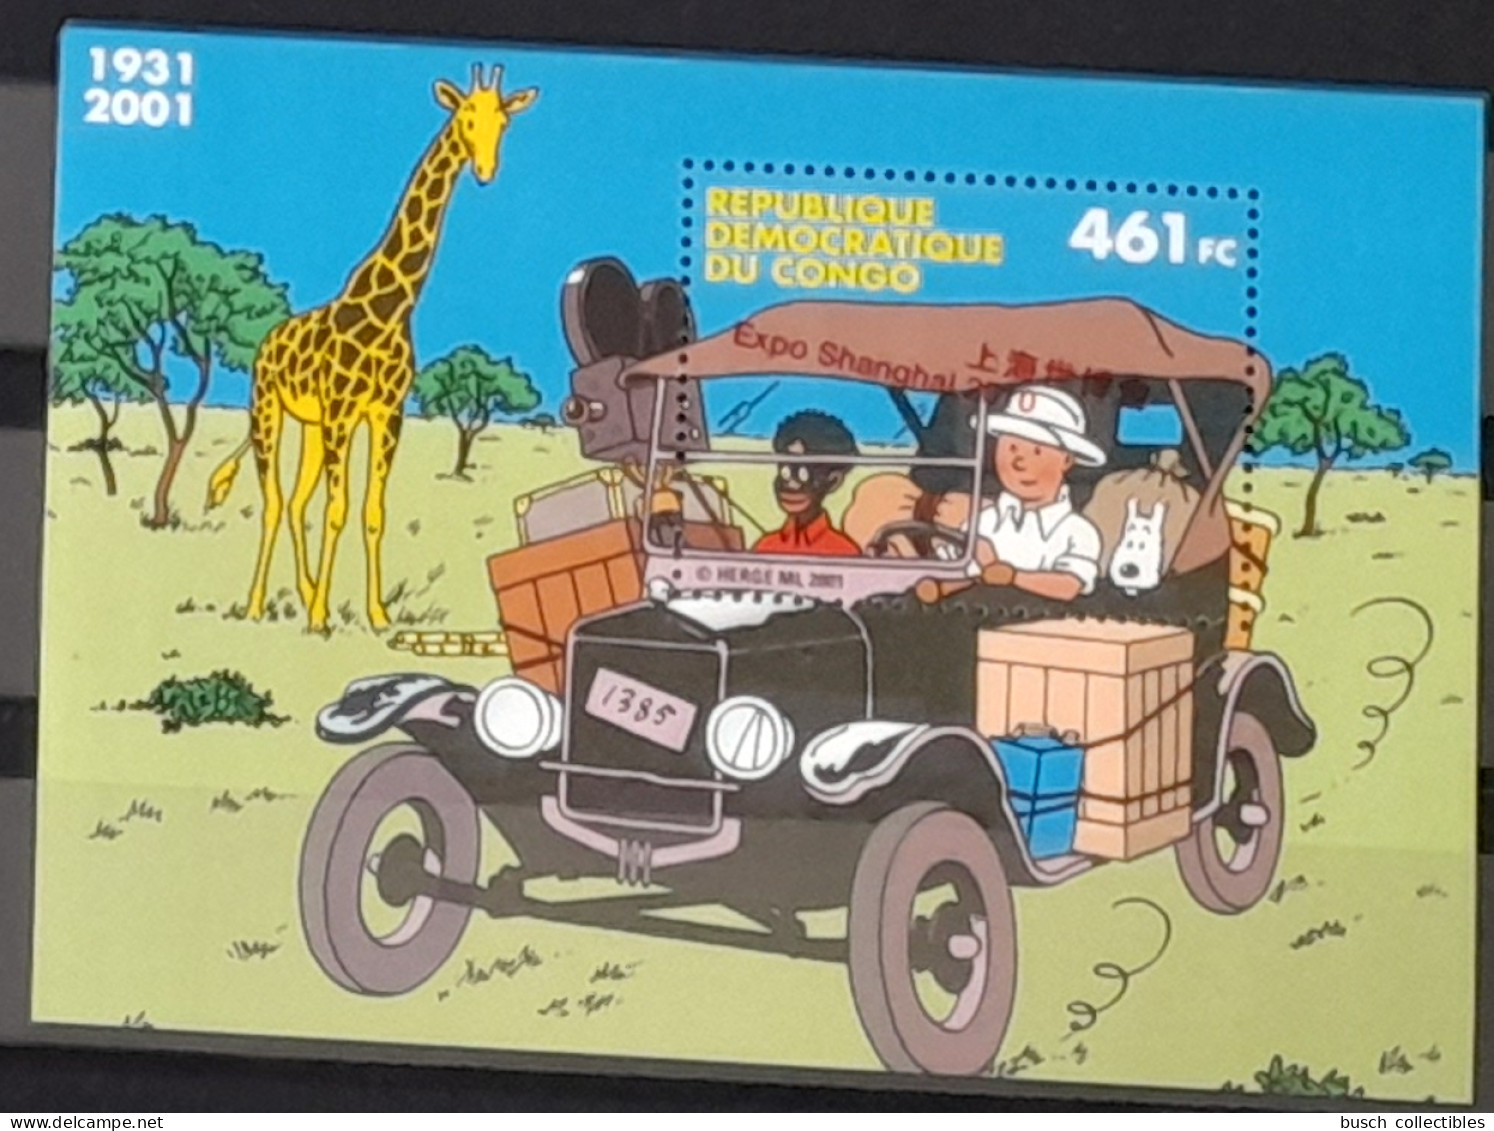 Congo Kinshasa 2010 Mi. Bl. ? VARIETE SURCHARGE OBLIQUE Overprint Tintin Joint Issue Girafe Expo Shanghai Hergé - Nuovi